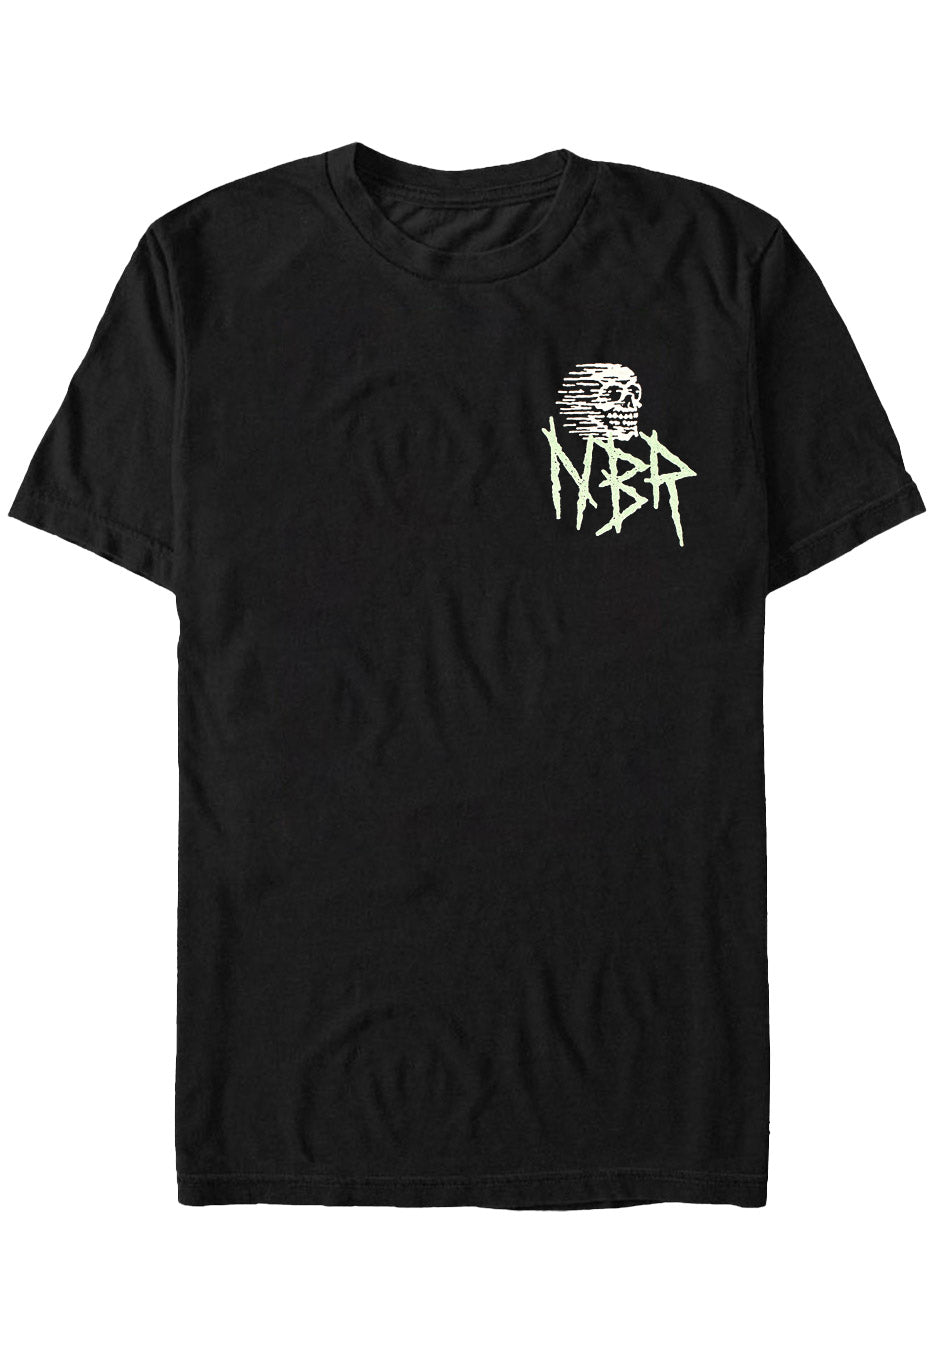 Nuclear Blast Merchandise - Blasthead Hands - T-Shirt